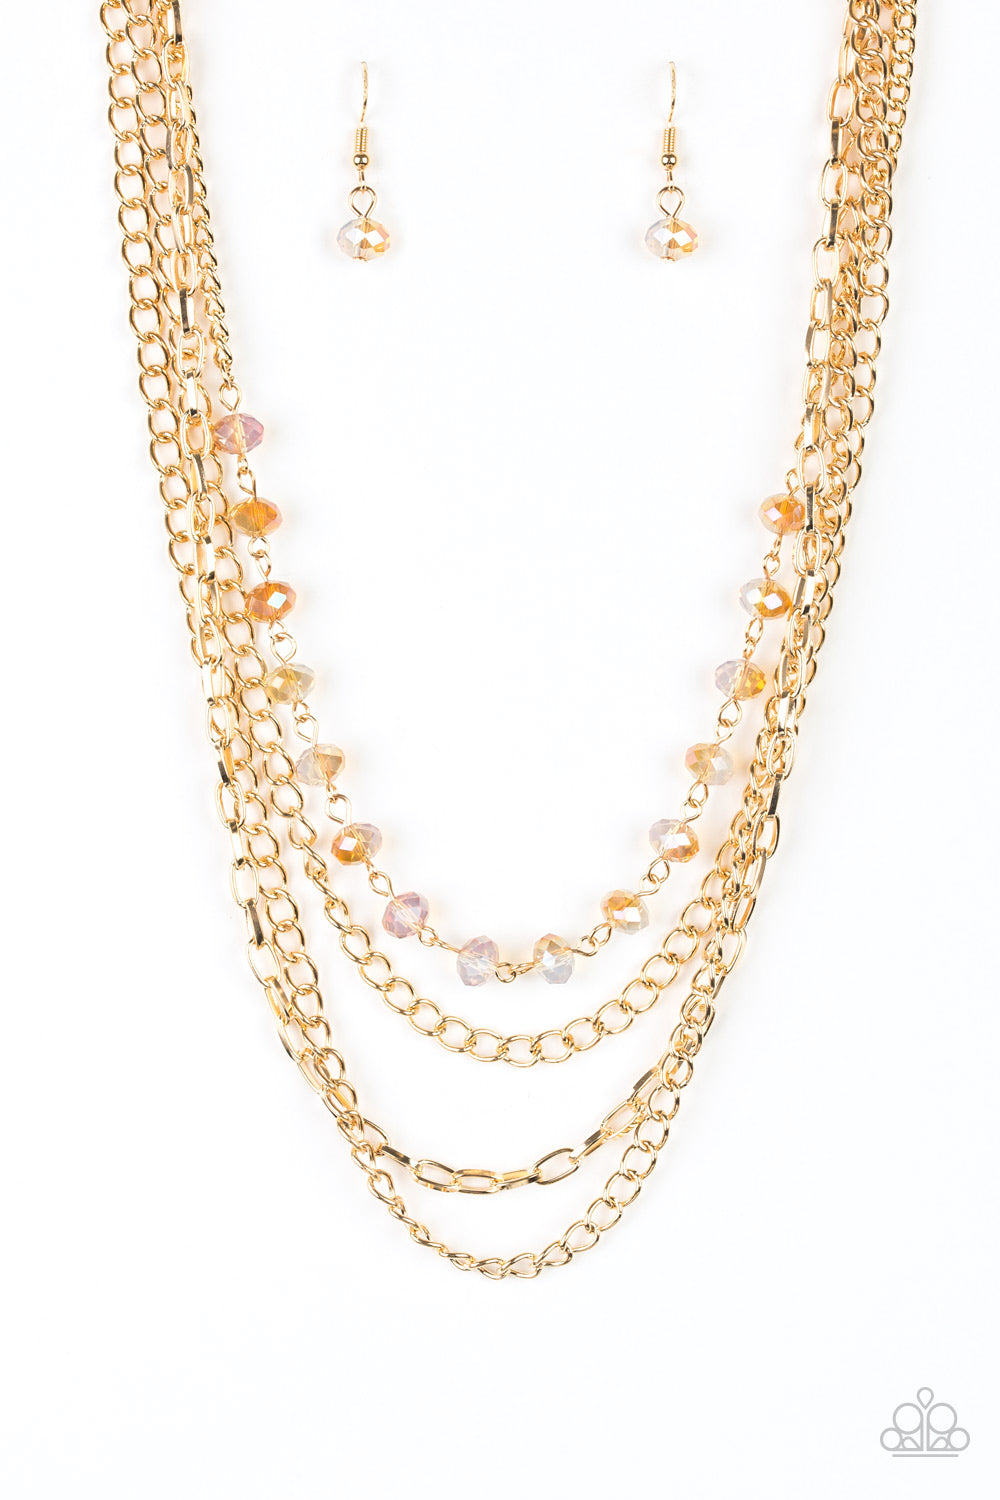 Extravagant Elegance Gold Paparazzi Necklaces Cashmere Pink Jewels - Cashmere Pink Jewels & Accessories, Cashmere Pink Jewels & Accessories - Paparazzi